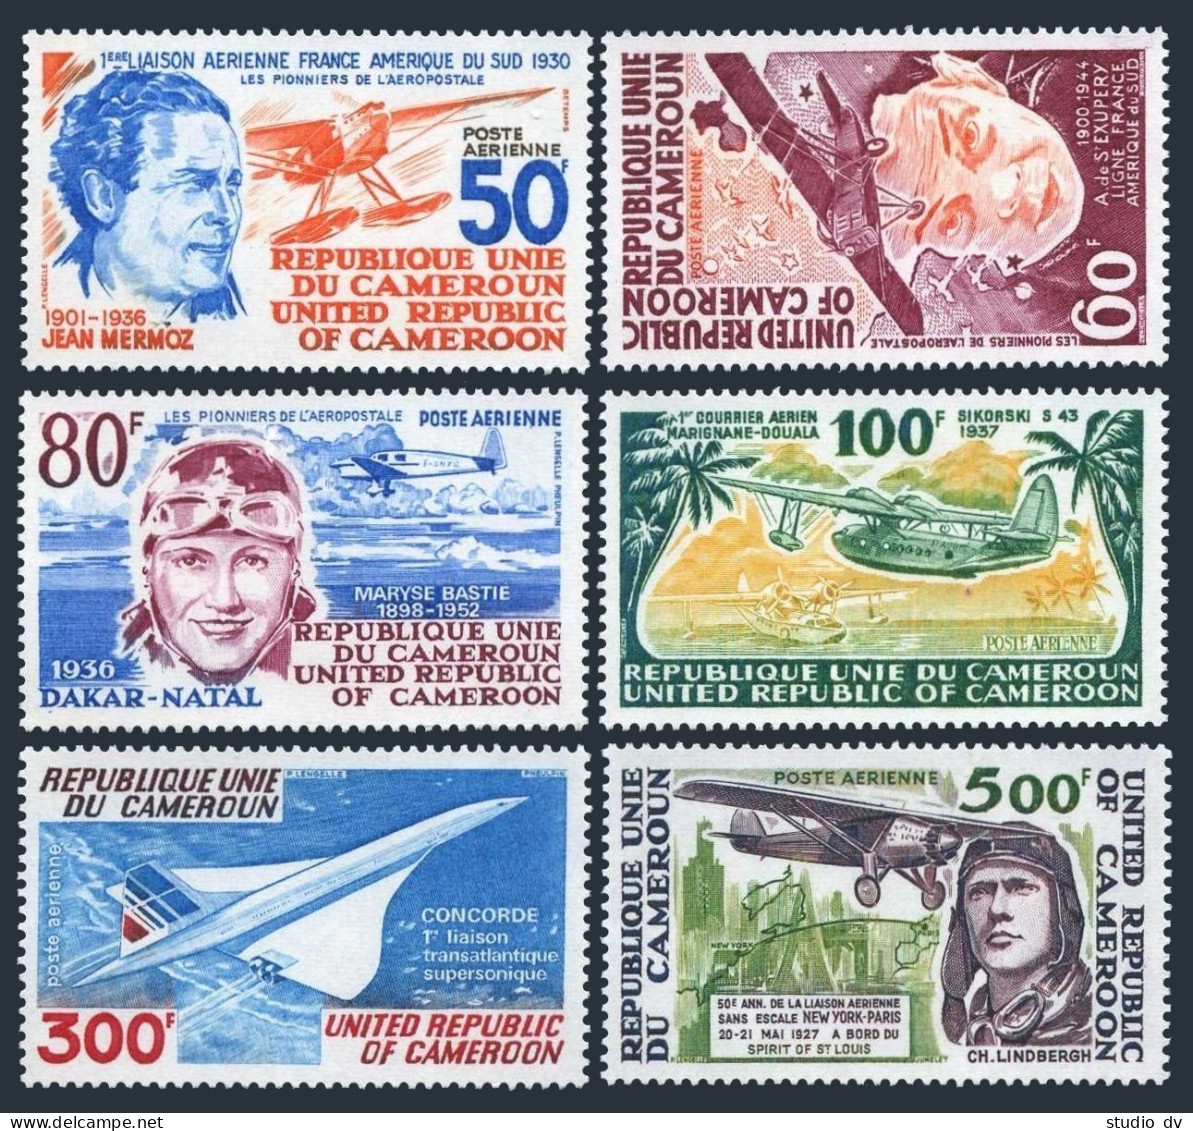 Cameroun C245-C250, MNH. Michel 843-848. Aviation Pioneers, Events. 1977.Mermoz, - Kameroen (1960-...)